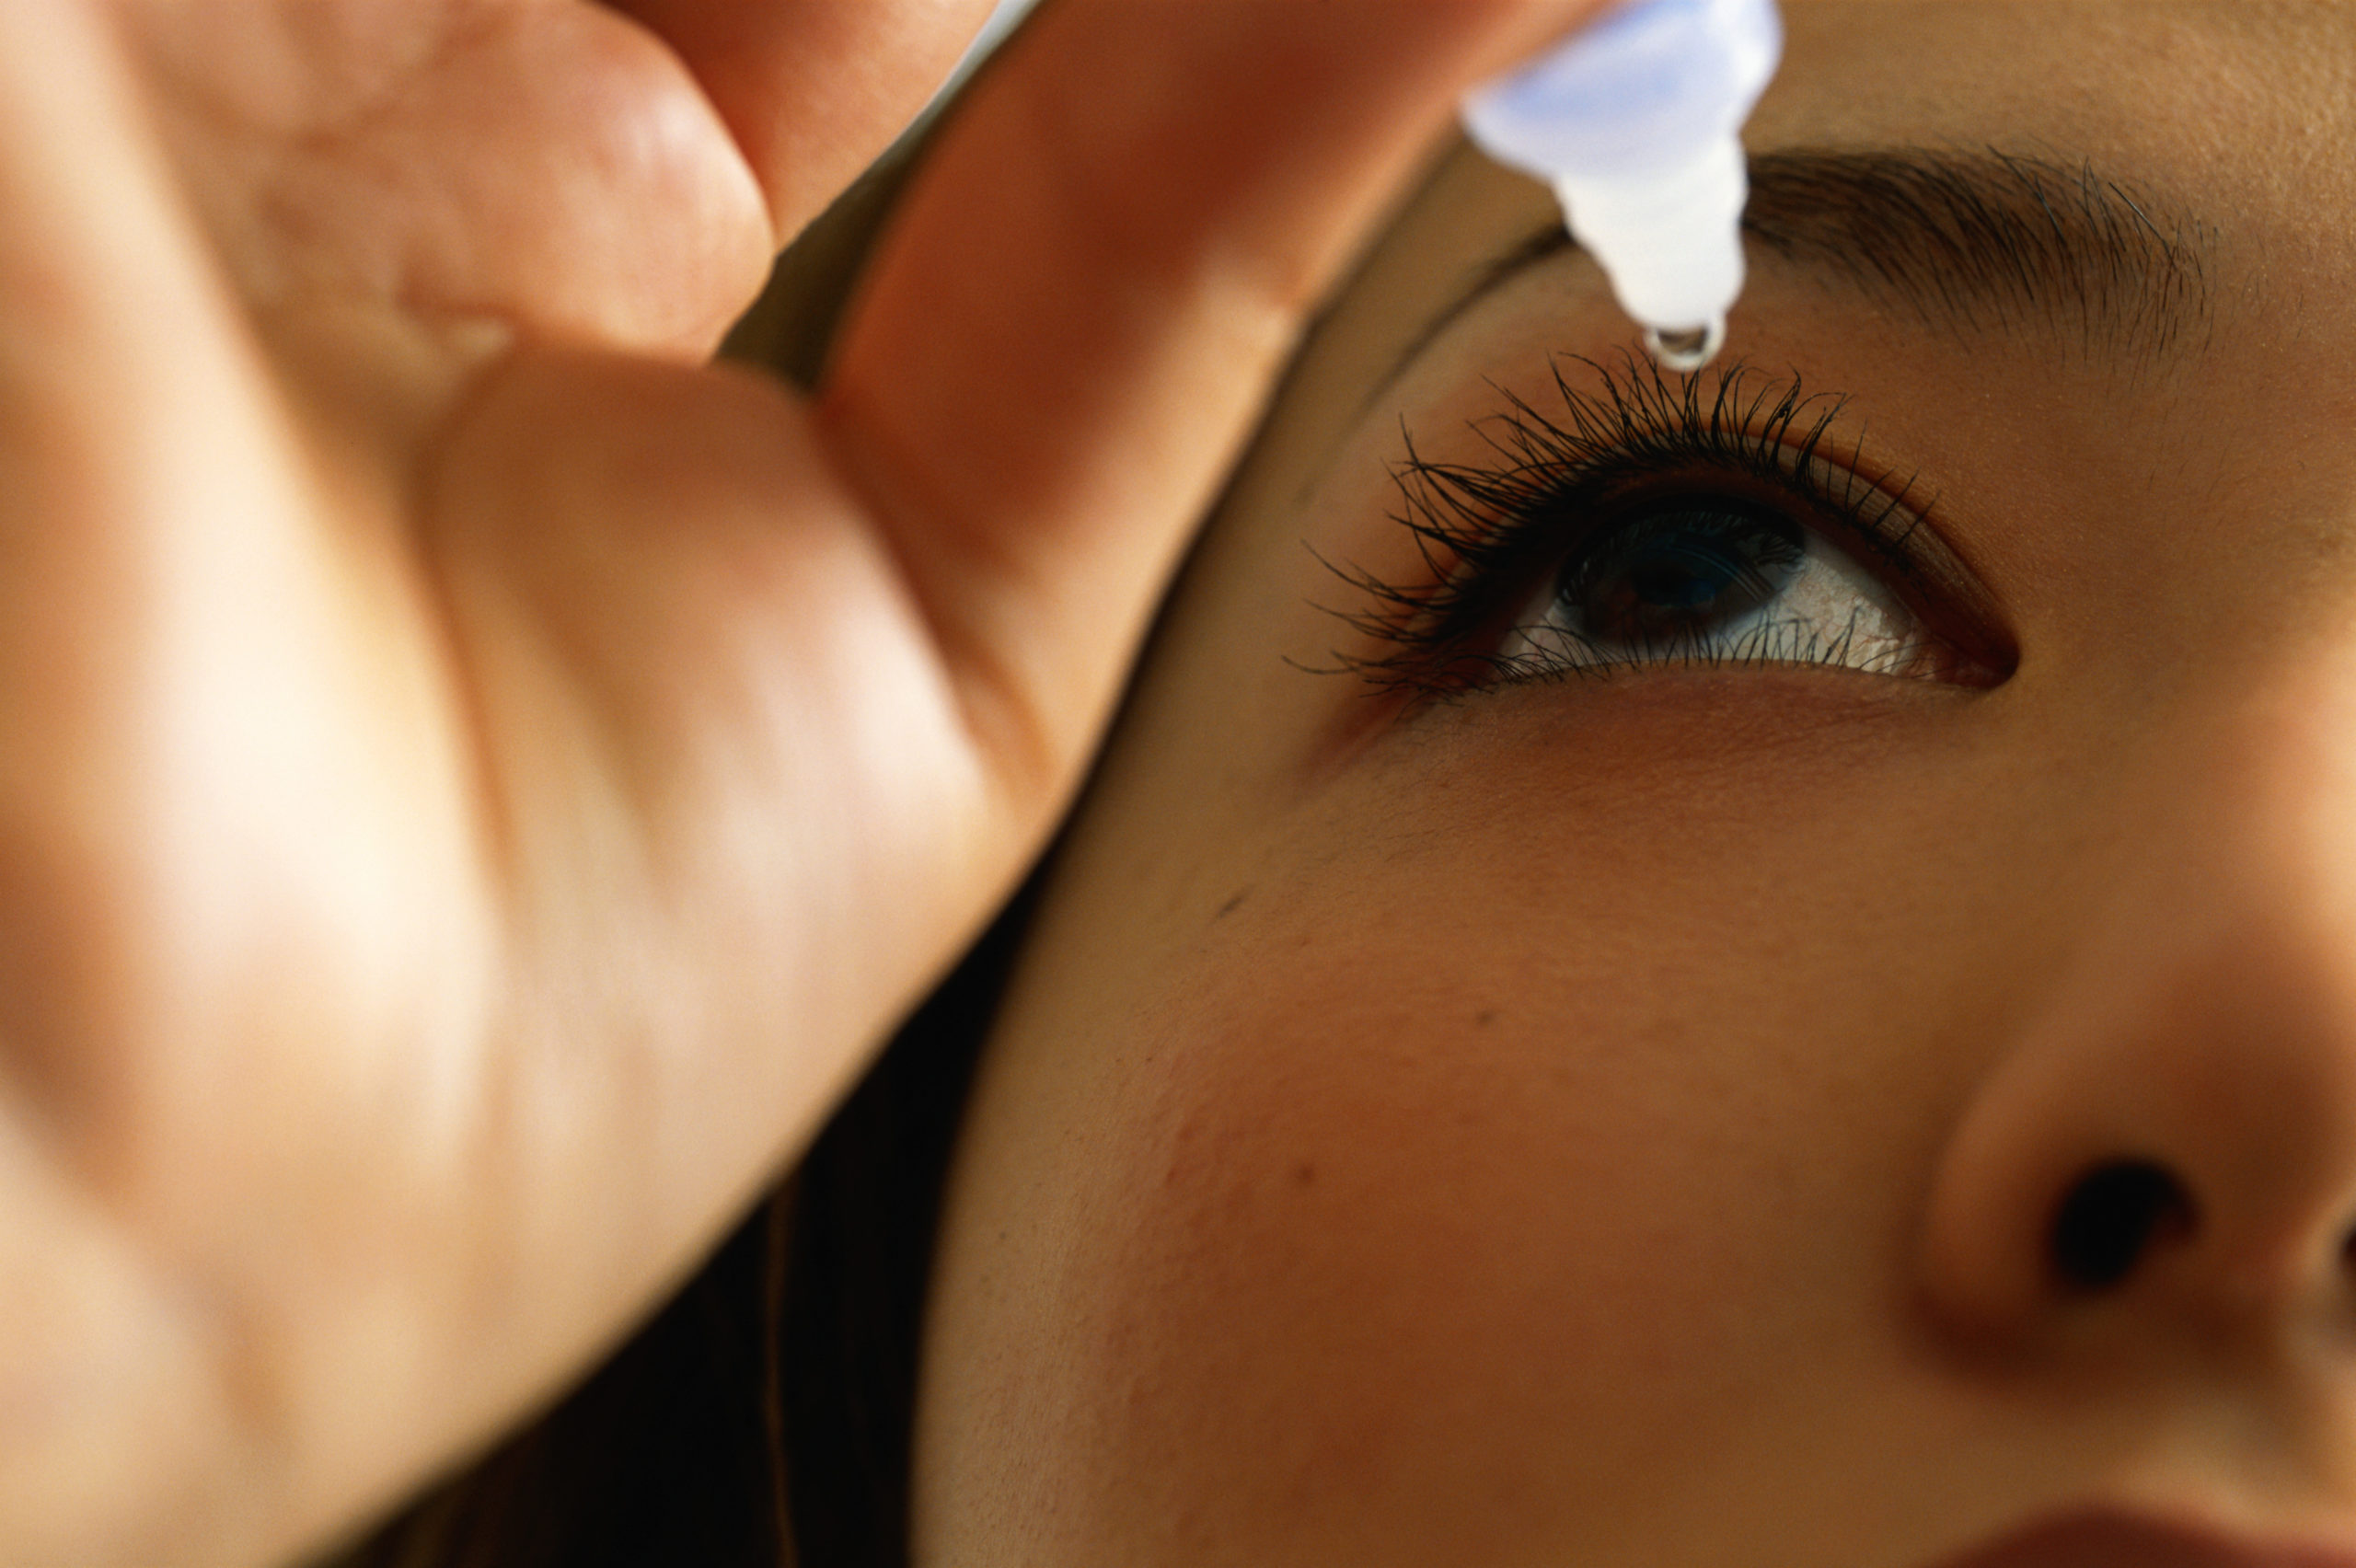 Woman using eye drops, close-up